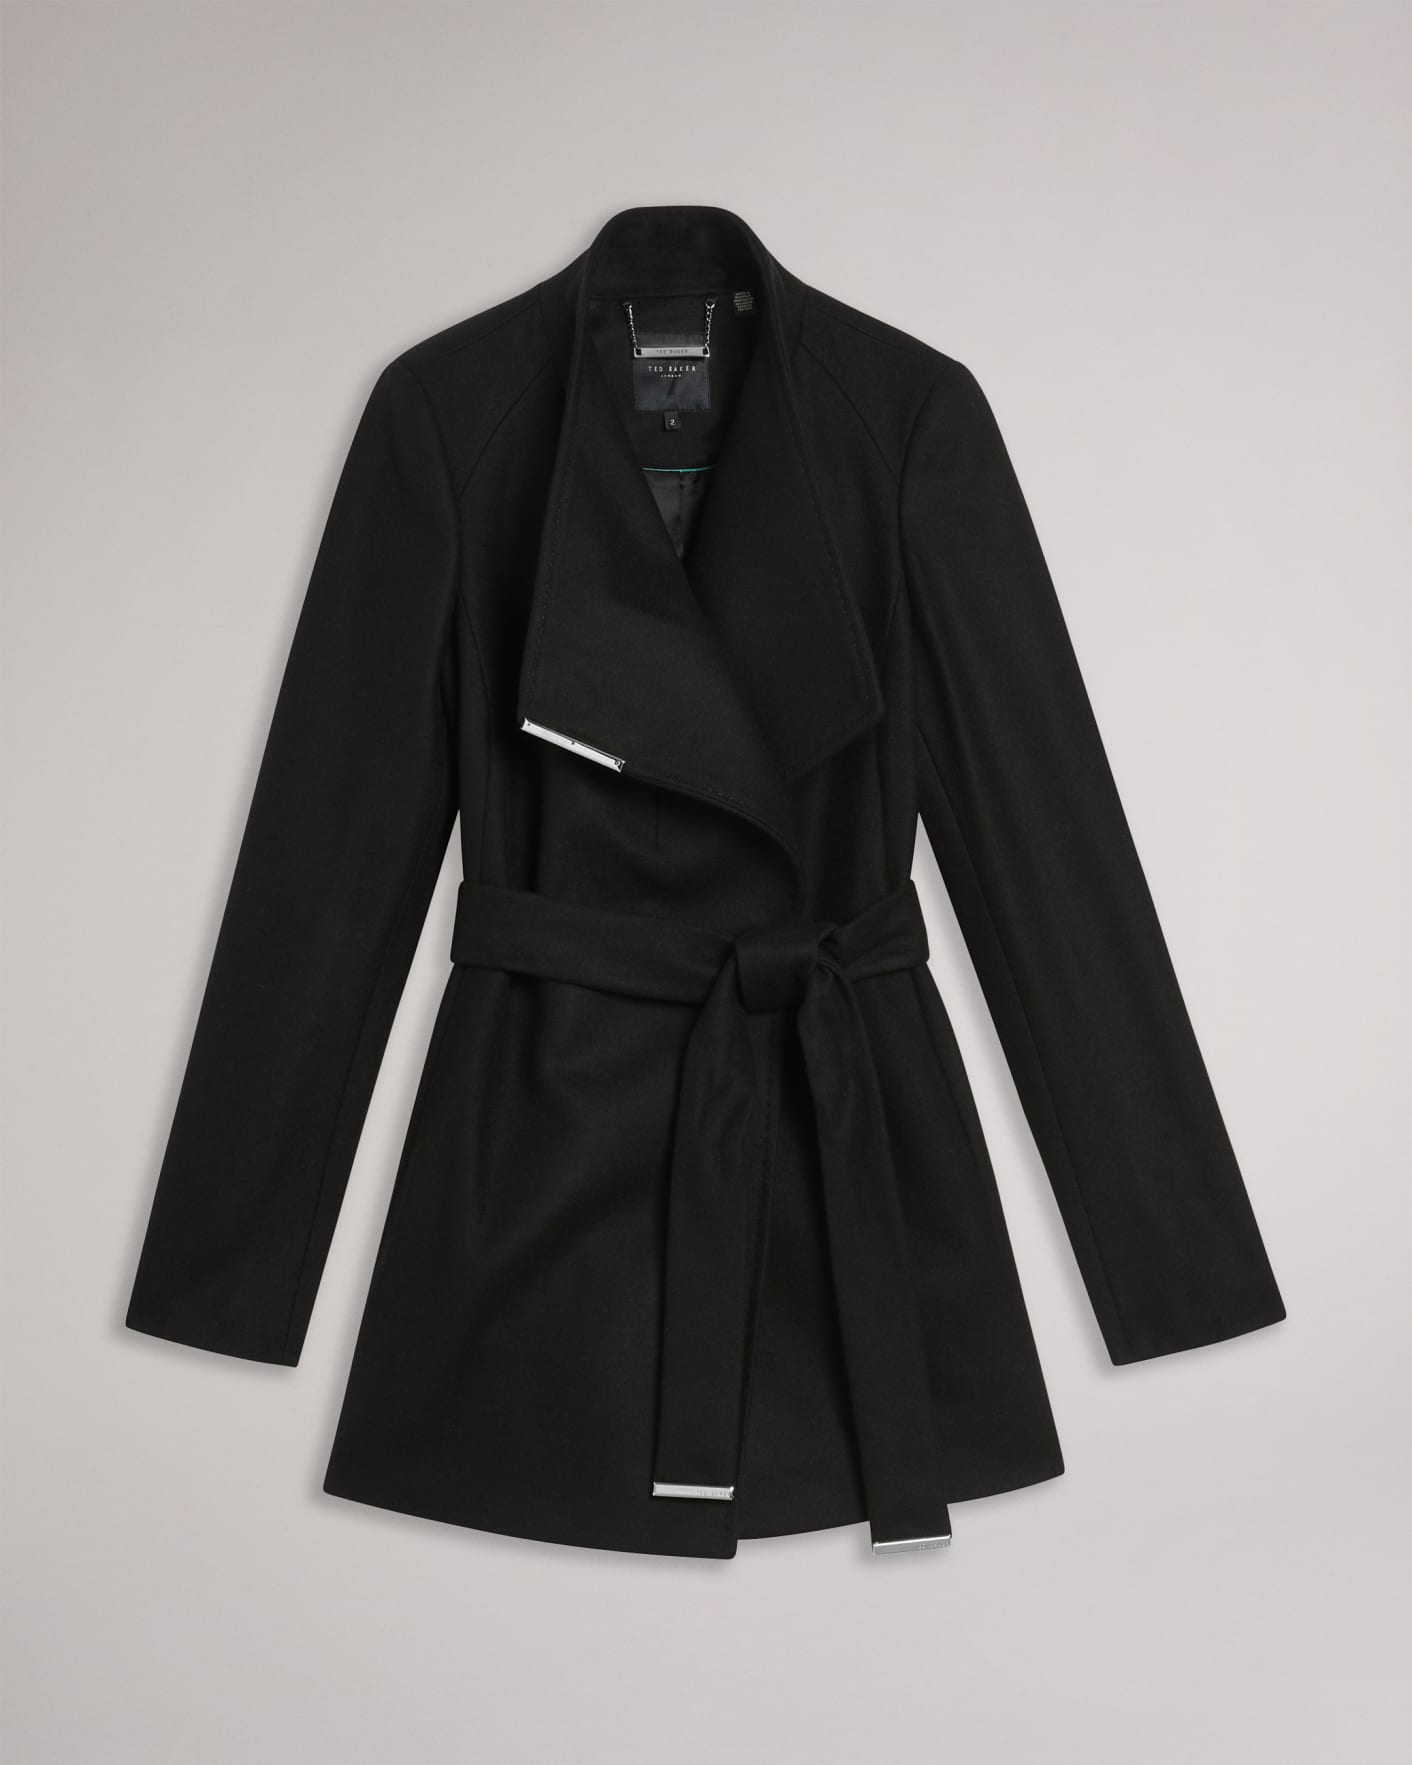 ROSESS - BLACK | Coats & Jackets | Ted Baker US | Ted Baker (US)